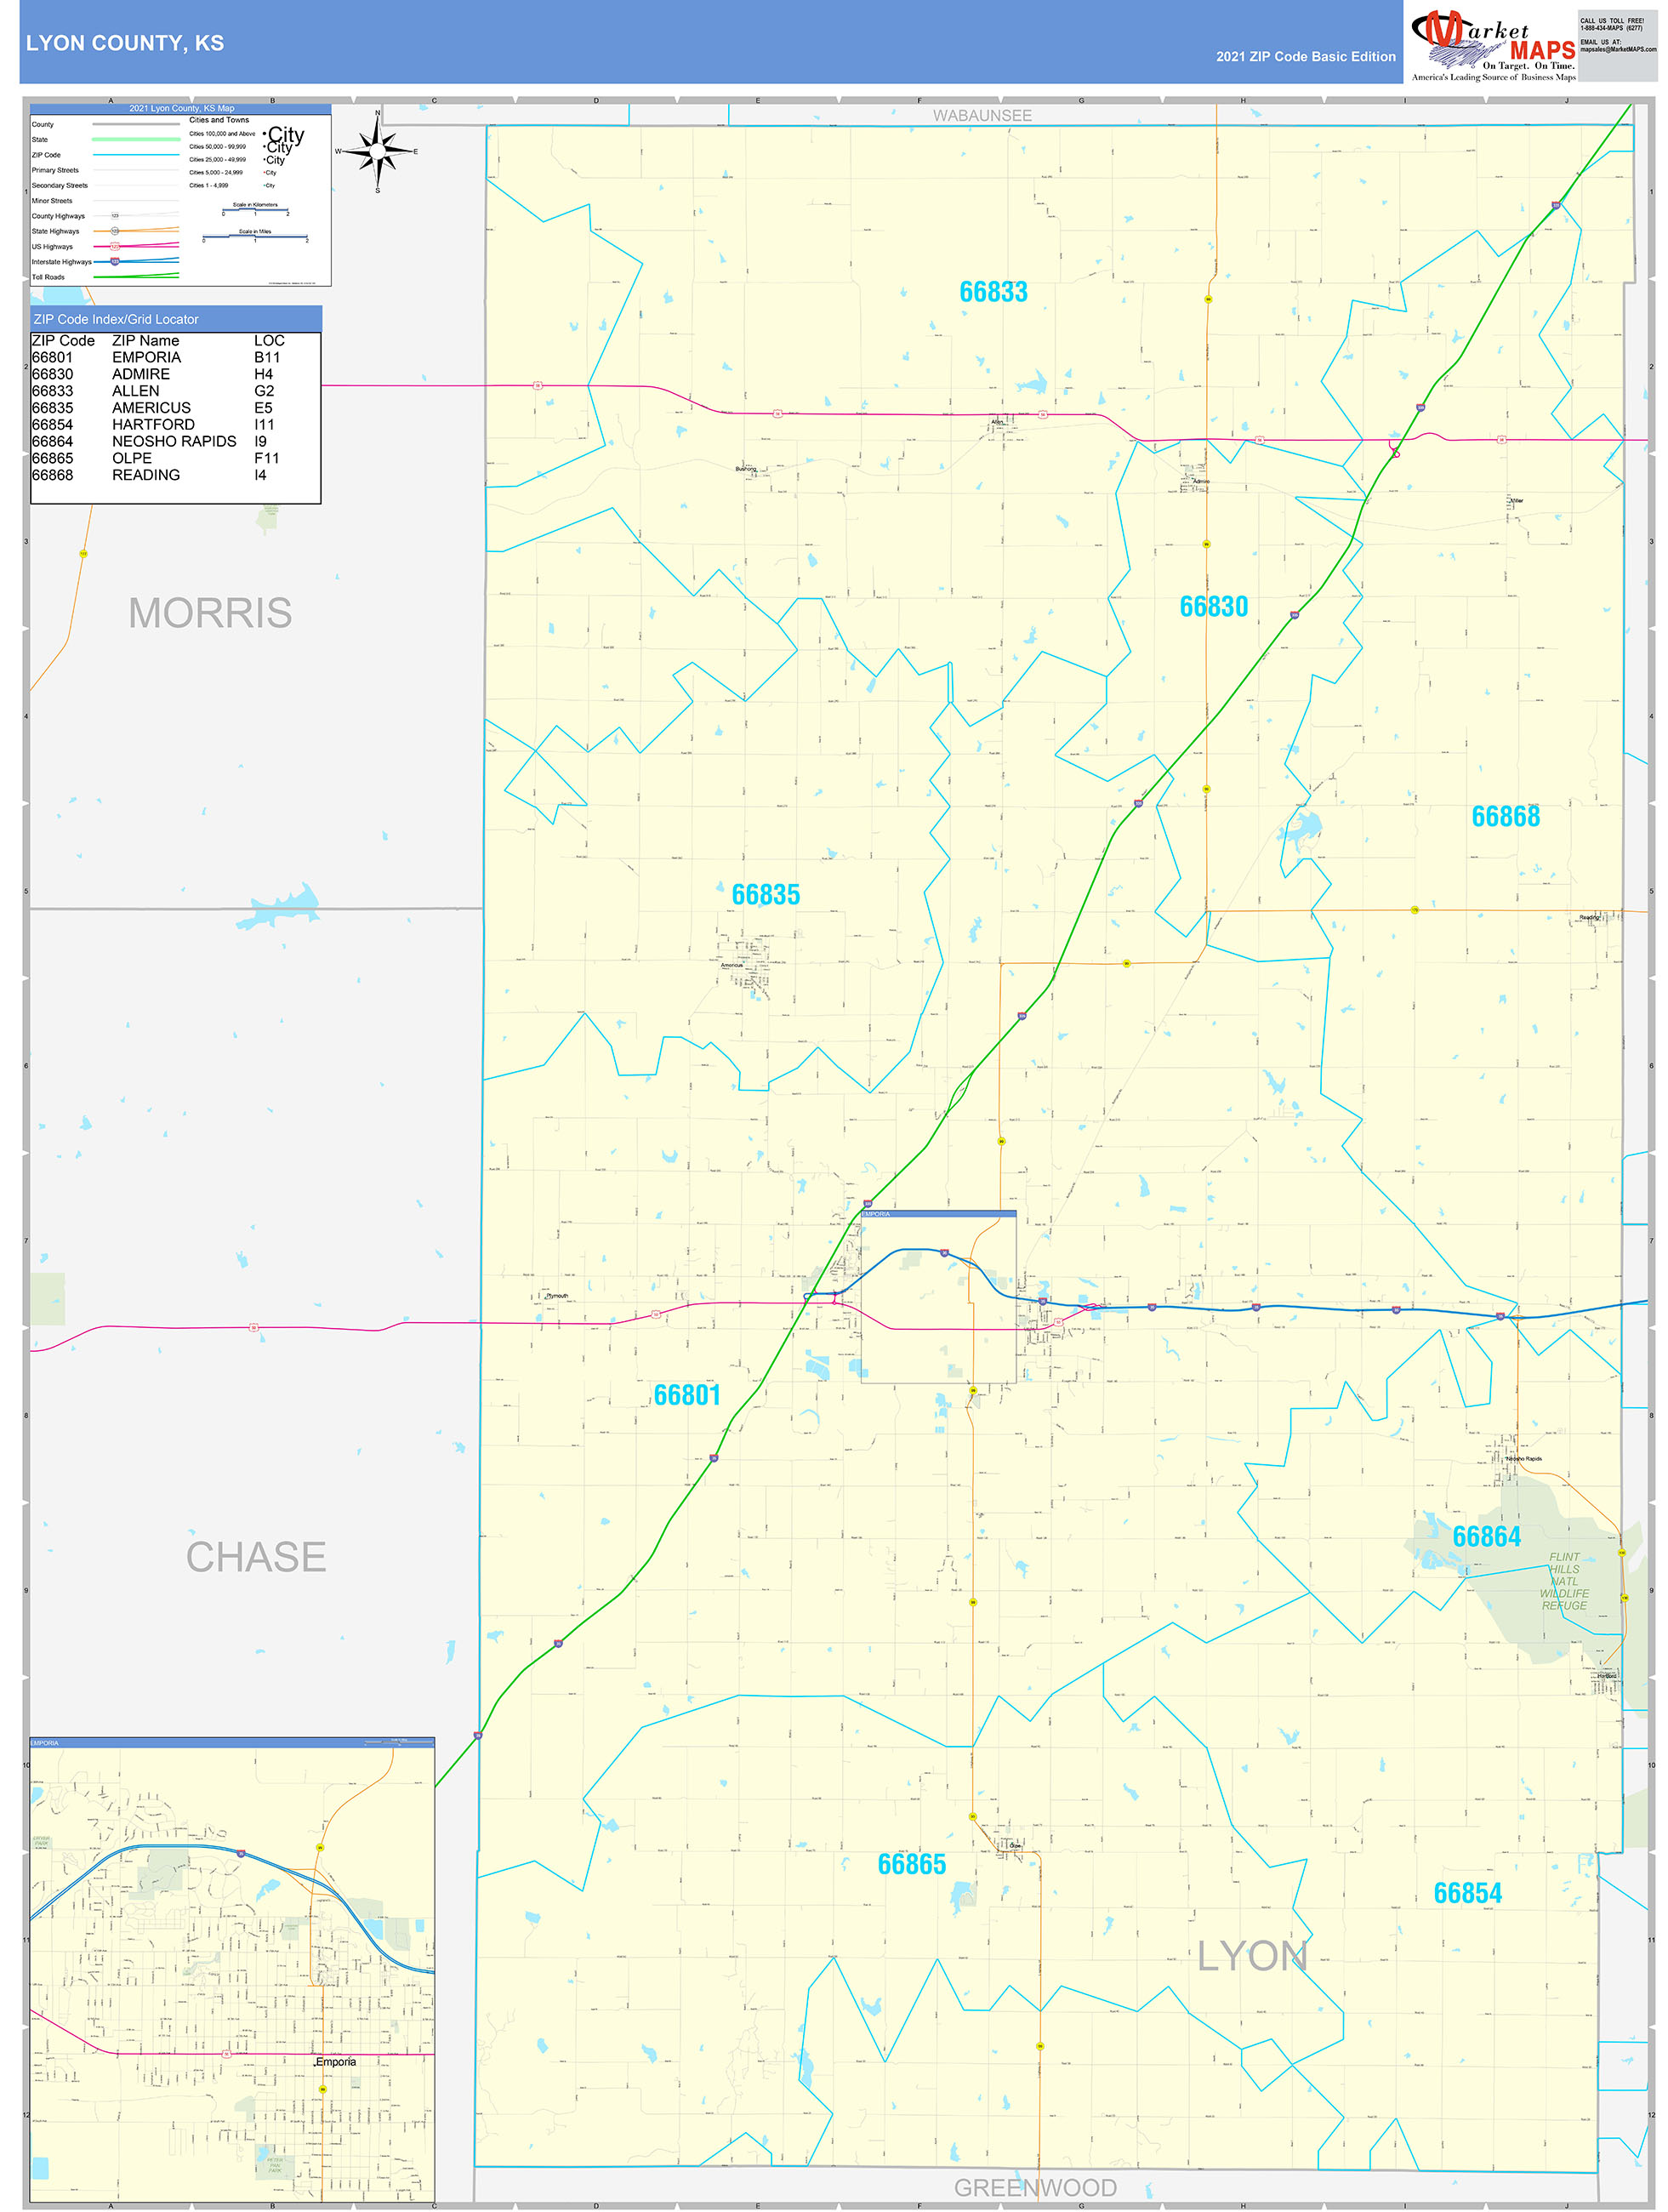 Lyon County, KS Zip Code Wall Map Basic Style by MarketMAPS